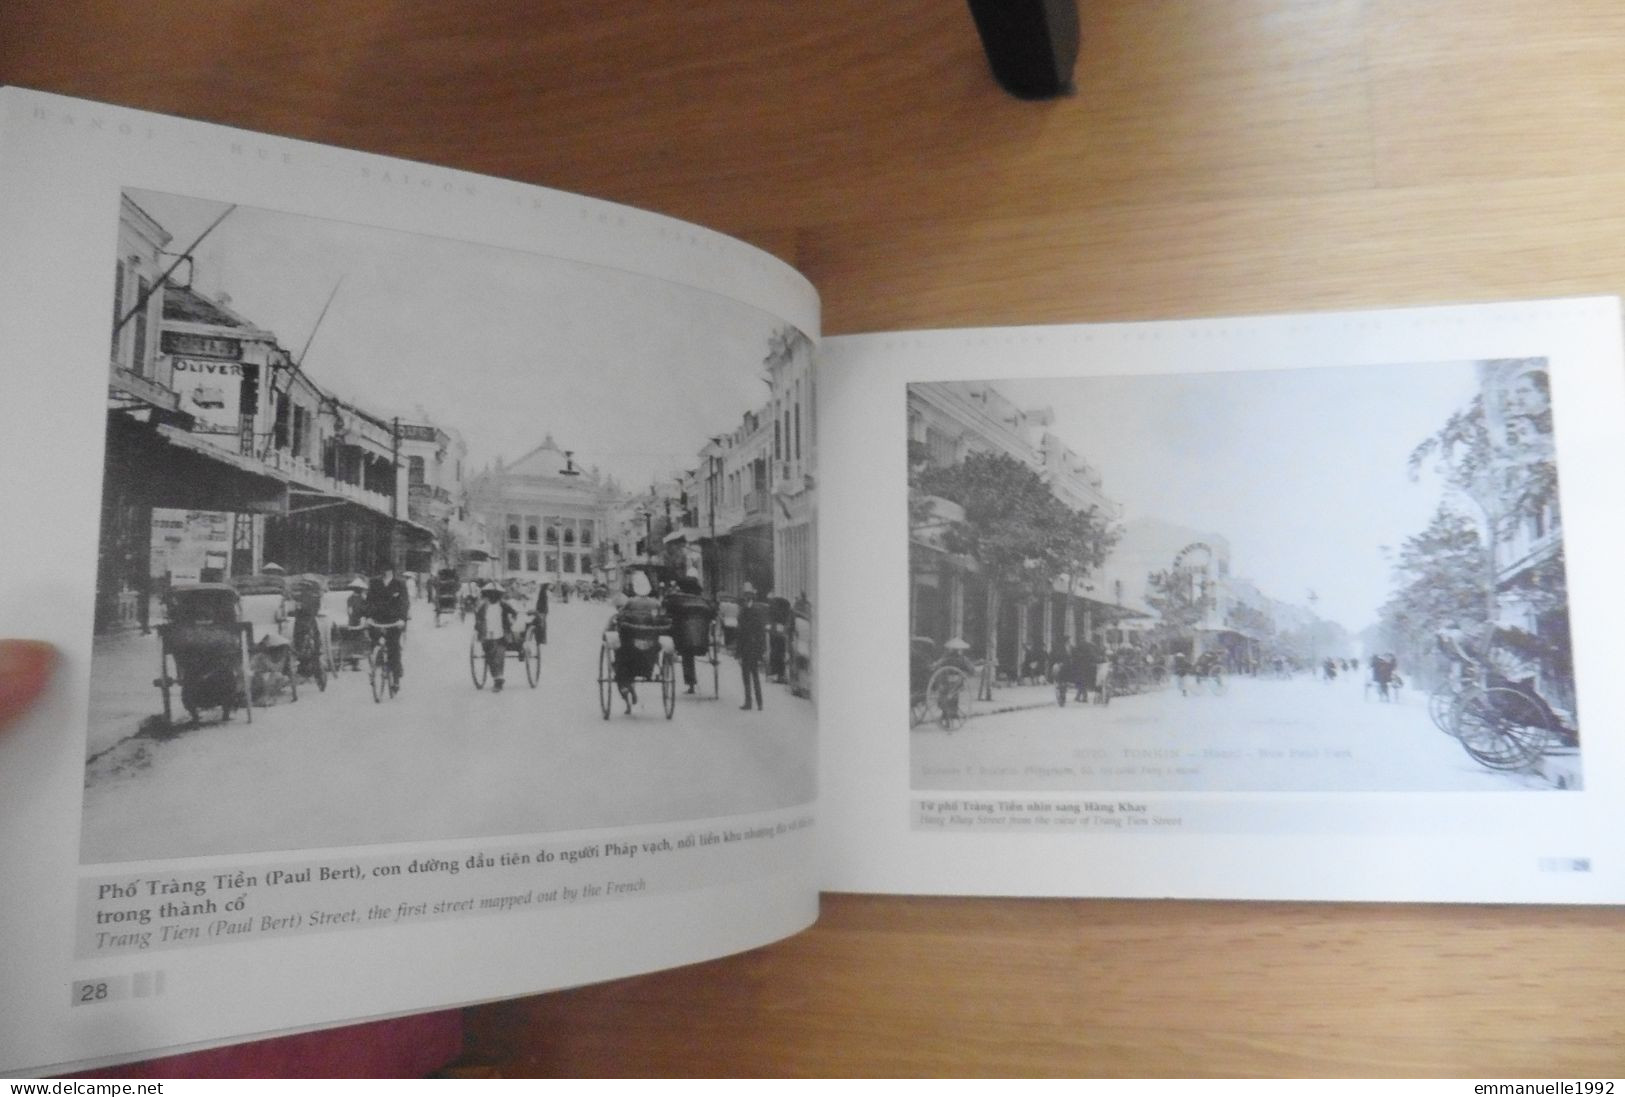 Hanoi Huê Saigon in the early of the 20th century photos & postcards - livre de cartes postales anciennes Indochine